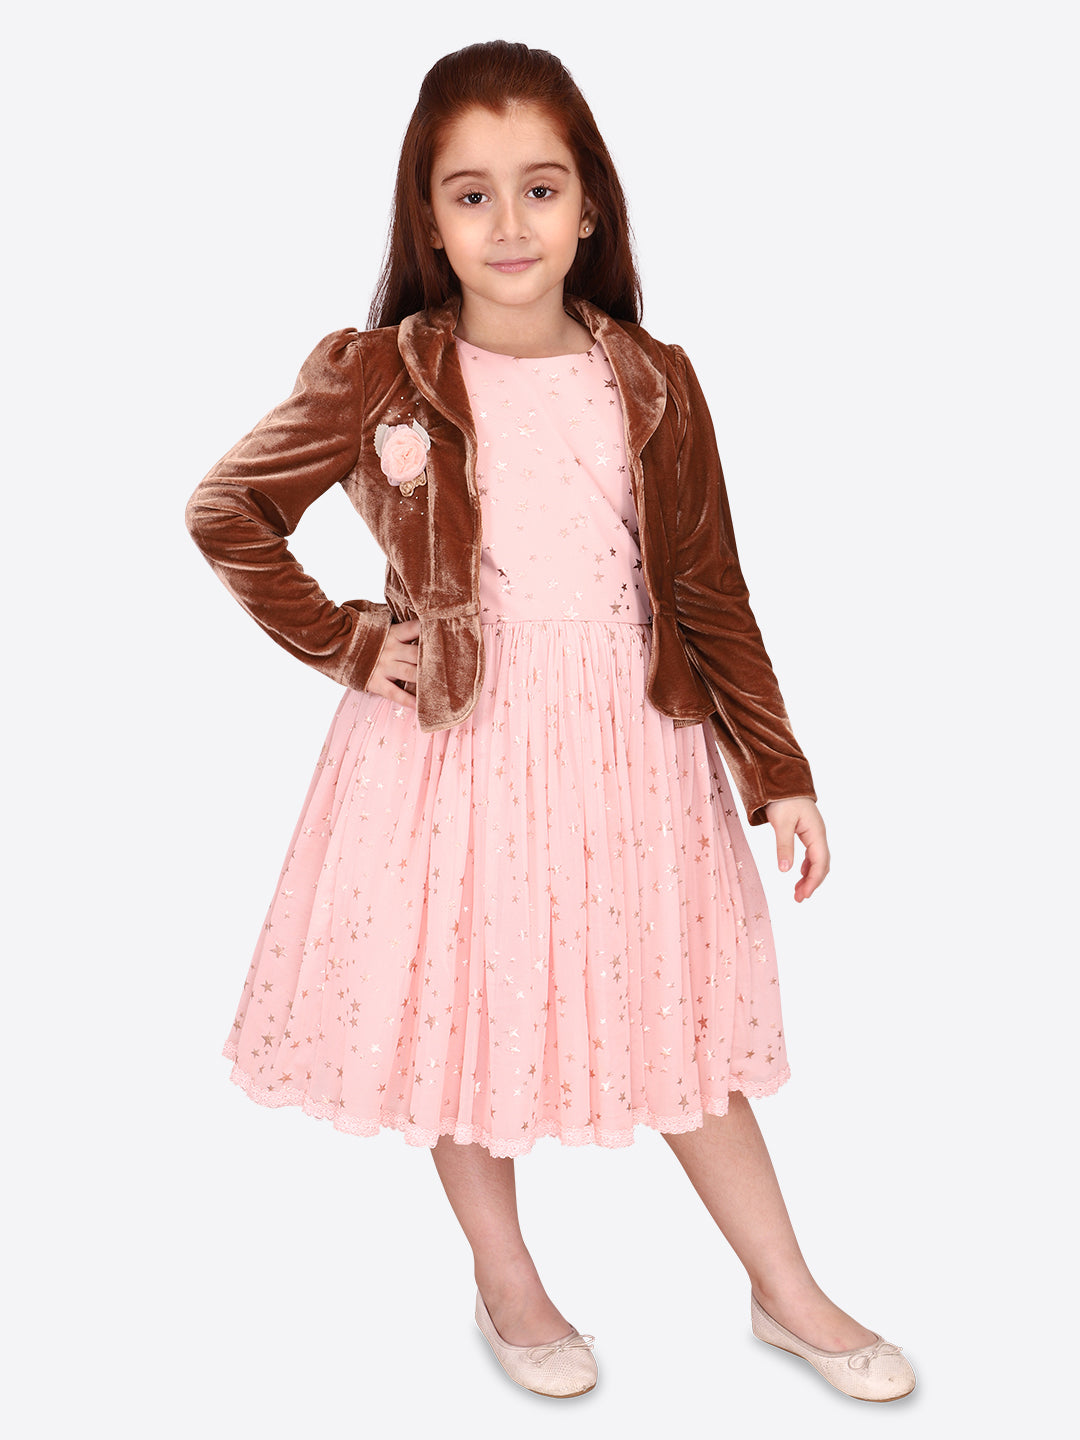 Baby Girls Midi/Knee Length Party Dress  (Brown, Full Sleeve)